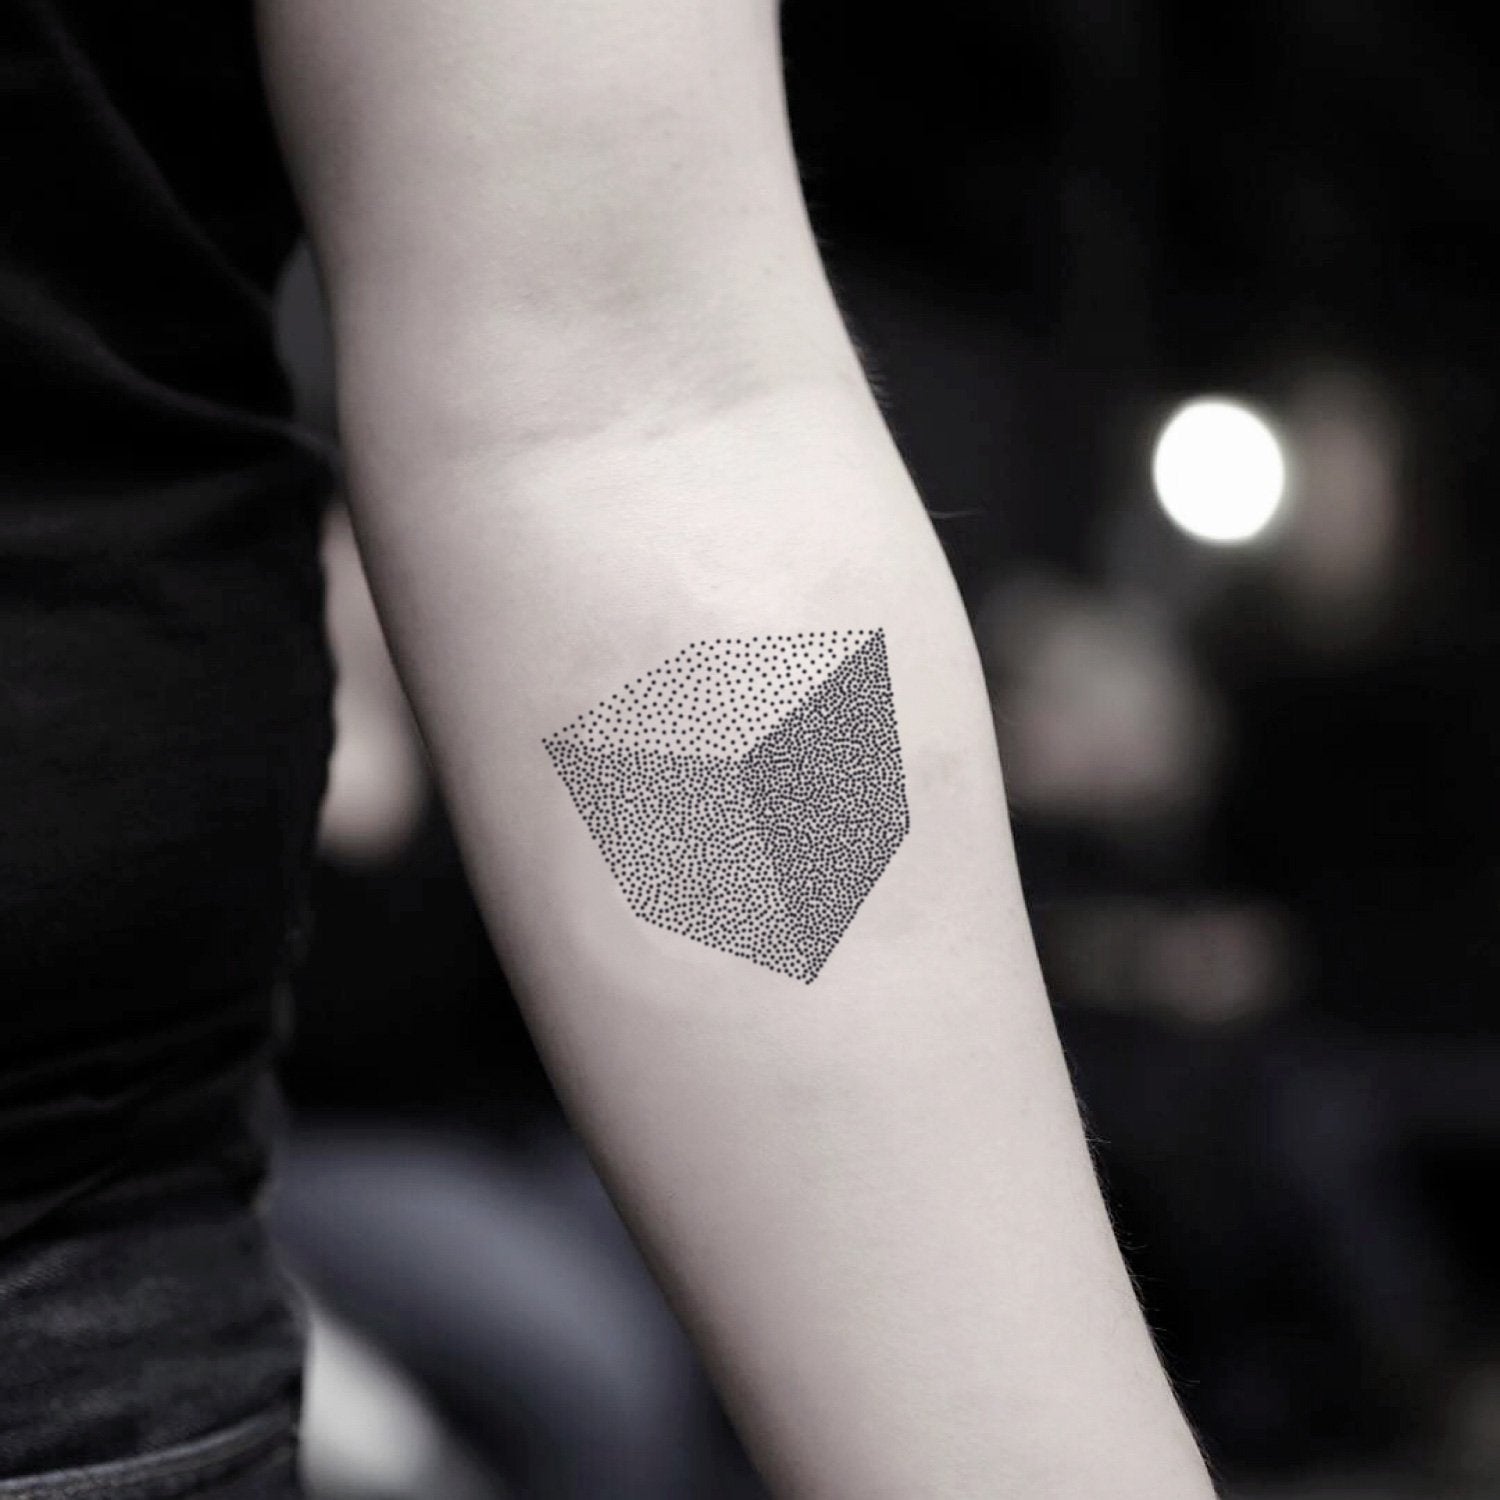 fake small cube pointillism geometric temporary tattoo sticker design idea on inner arm